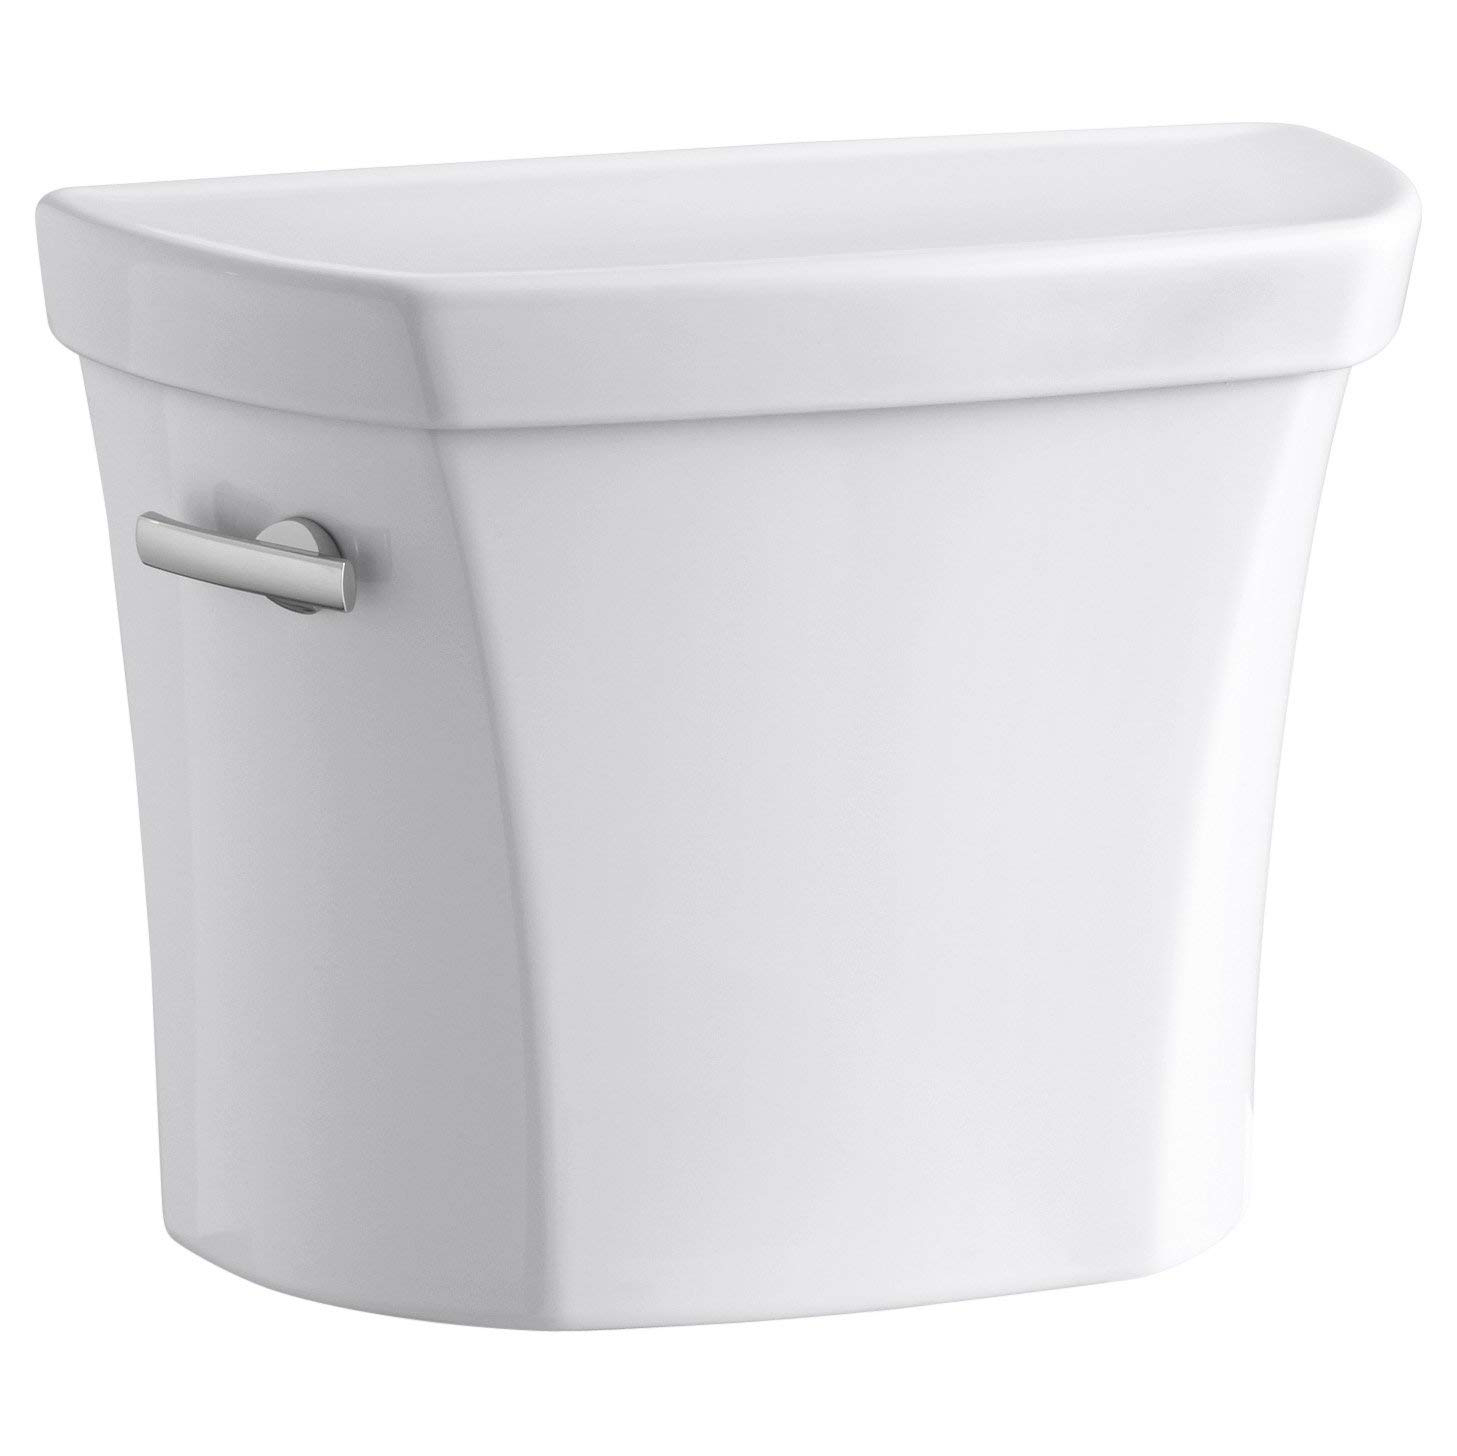 Wellworth 1.28 gpf Toilet Tank w/Insuliner & Locks in White